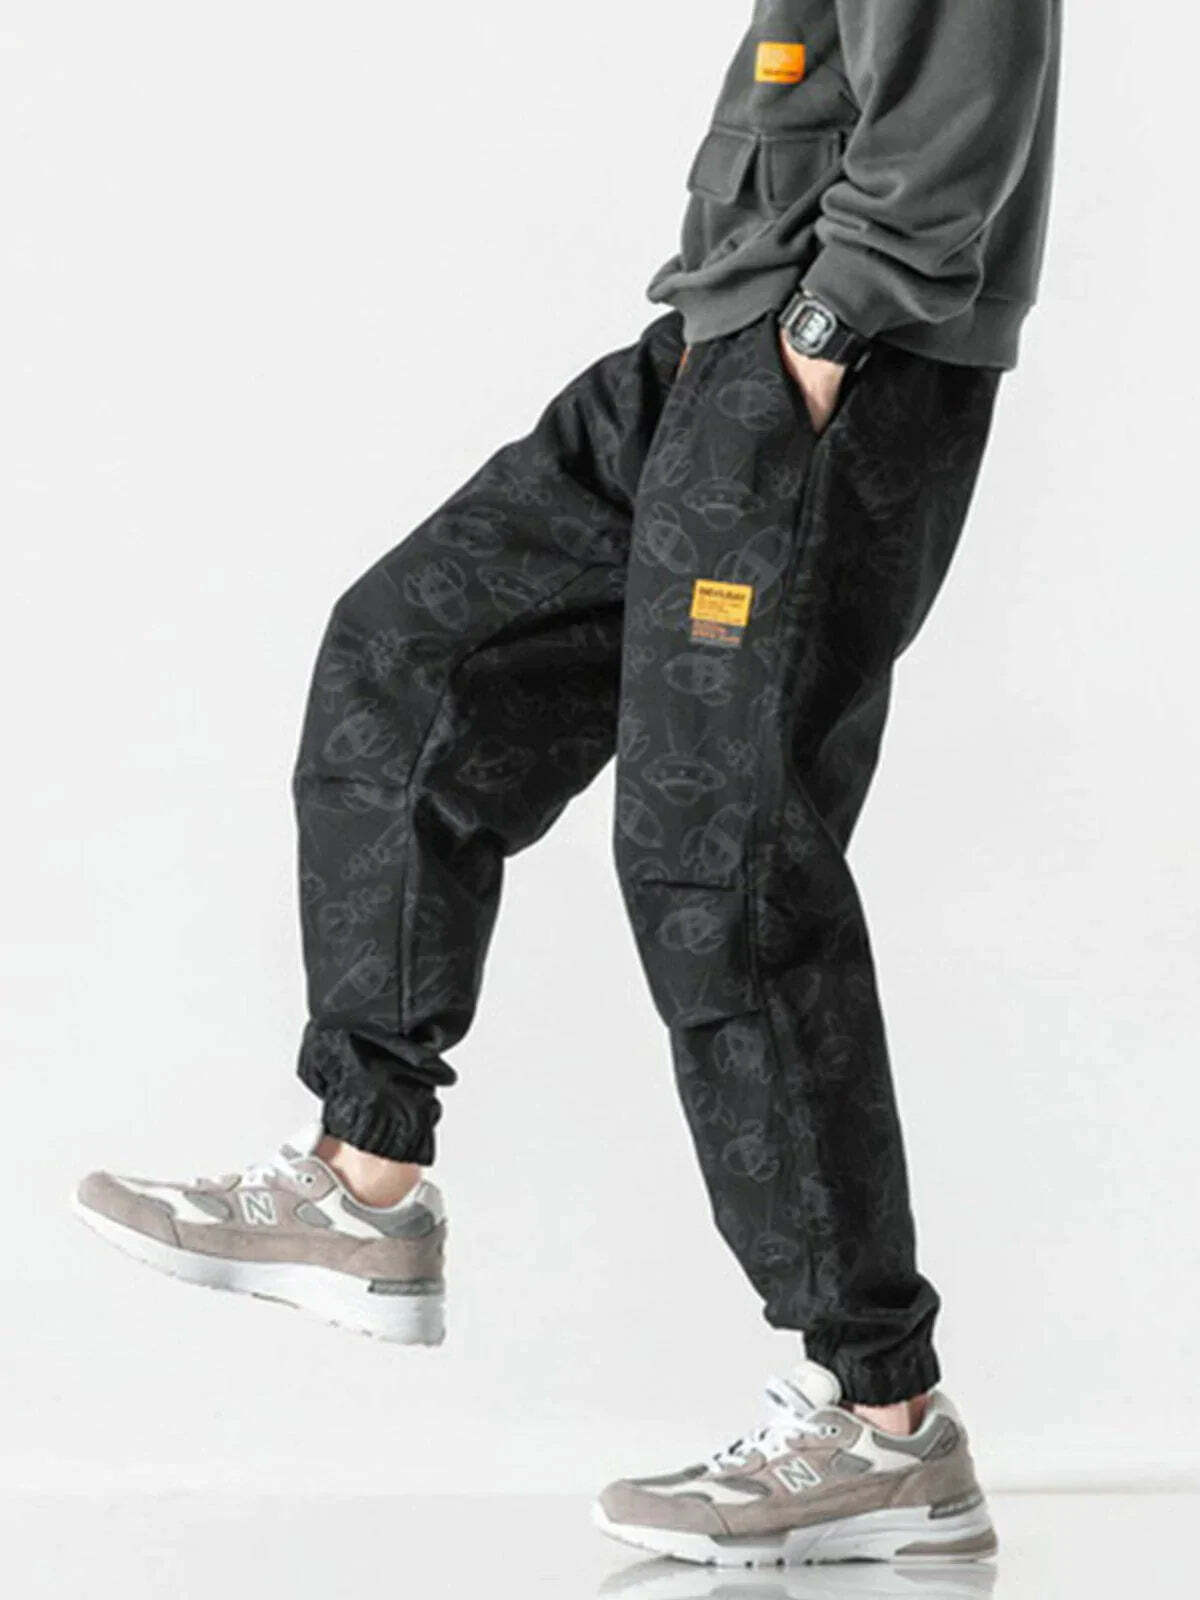 retro ufo pattern pants edgy & vibrant streetwear 7305